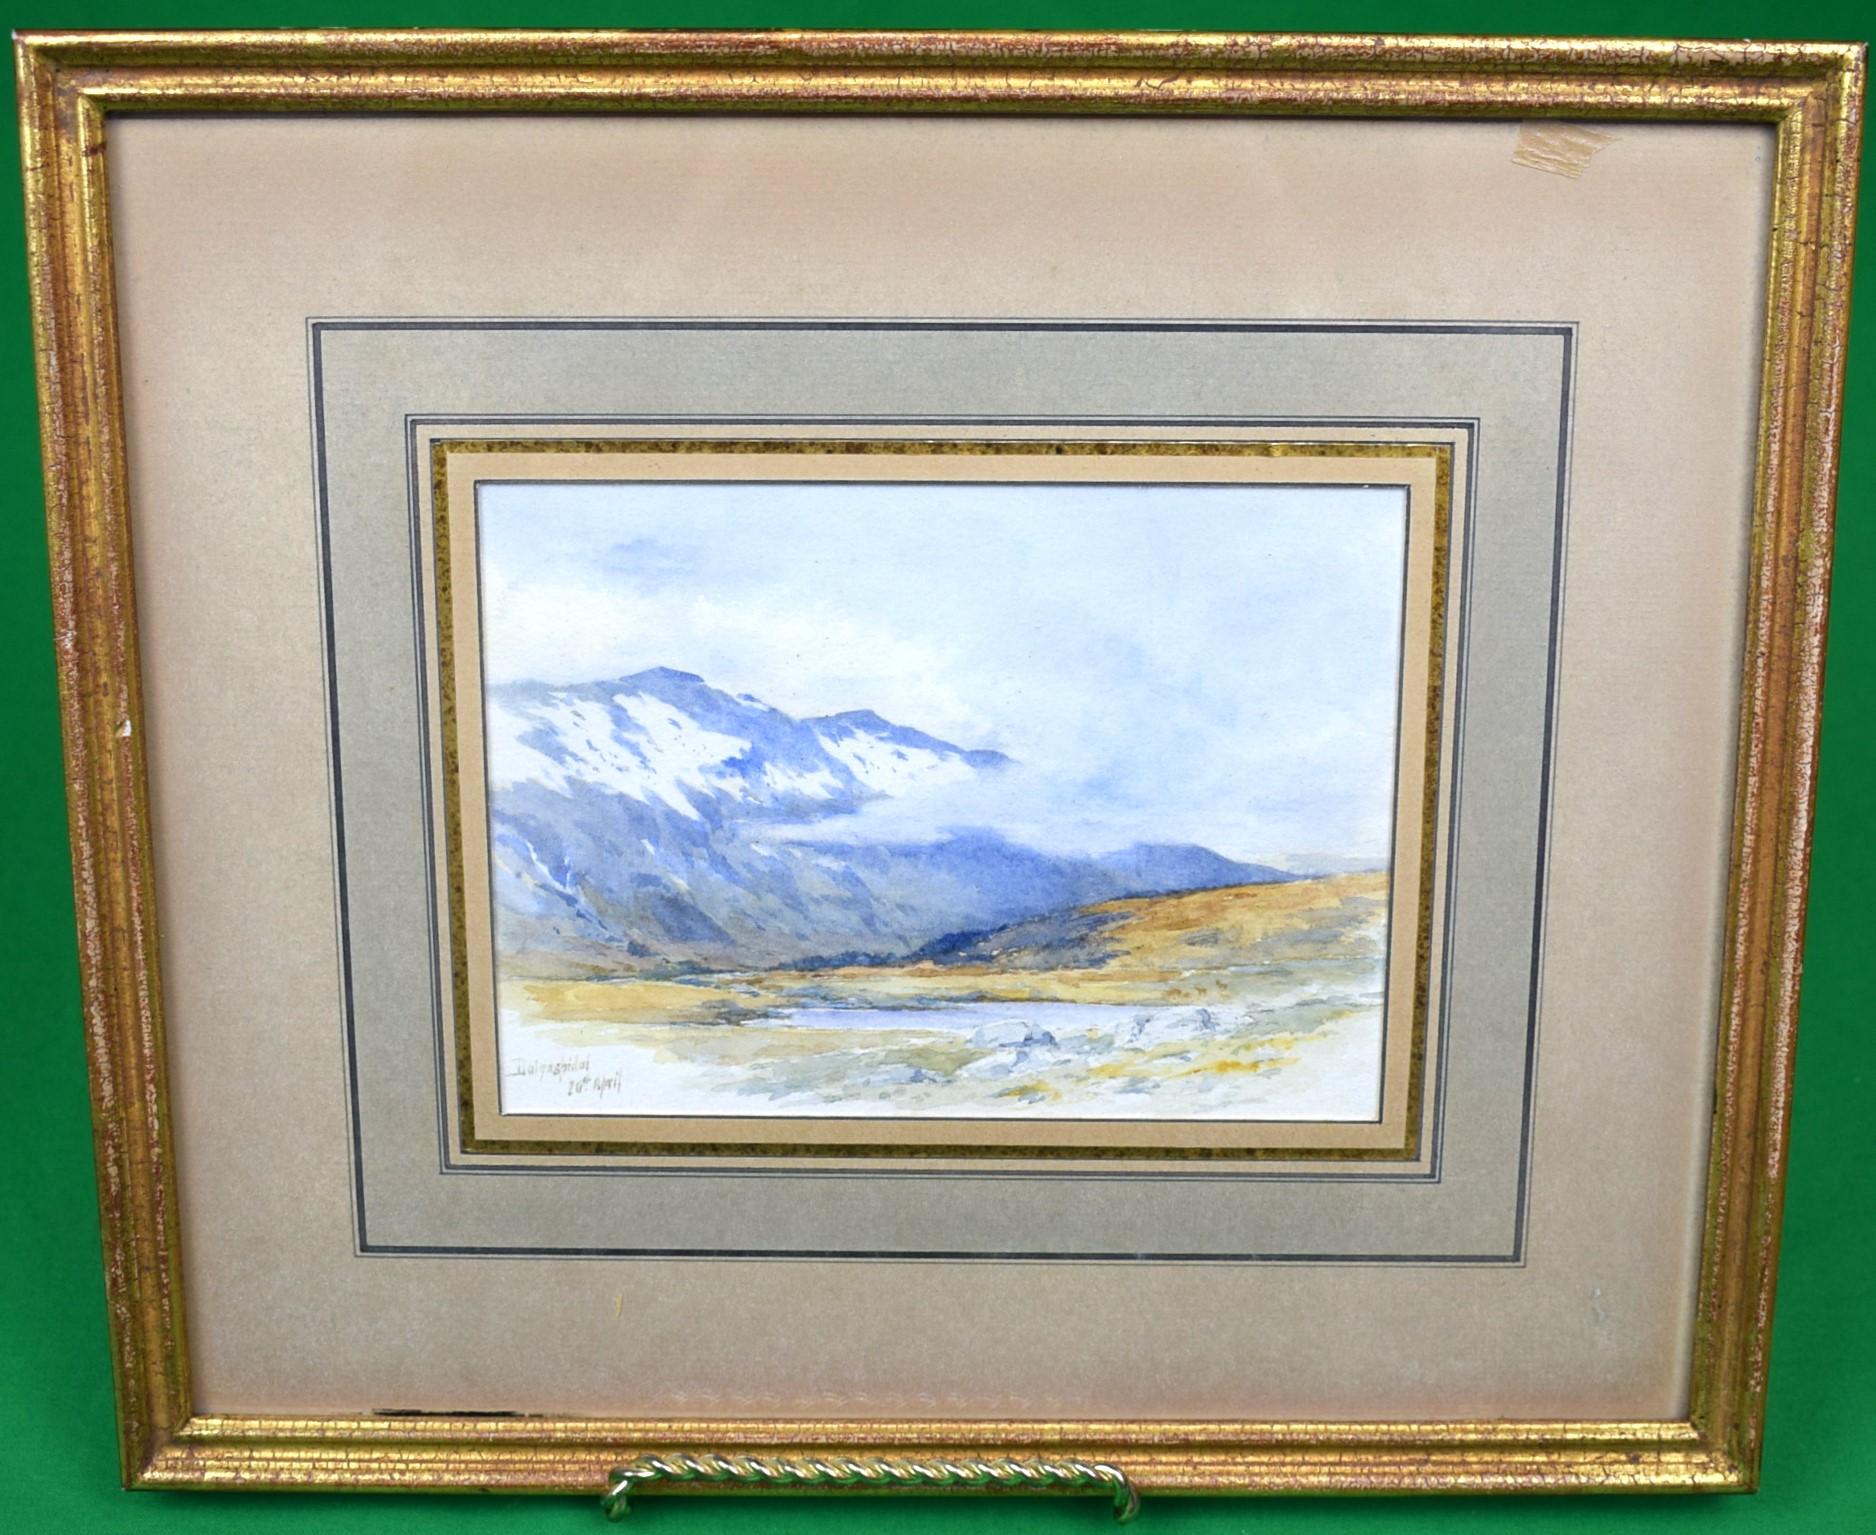 Unknown Landscape Art - "Dalnaspidal Scottish Landscape Watercolour"